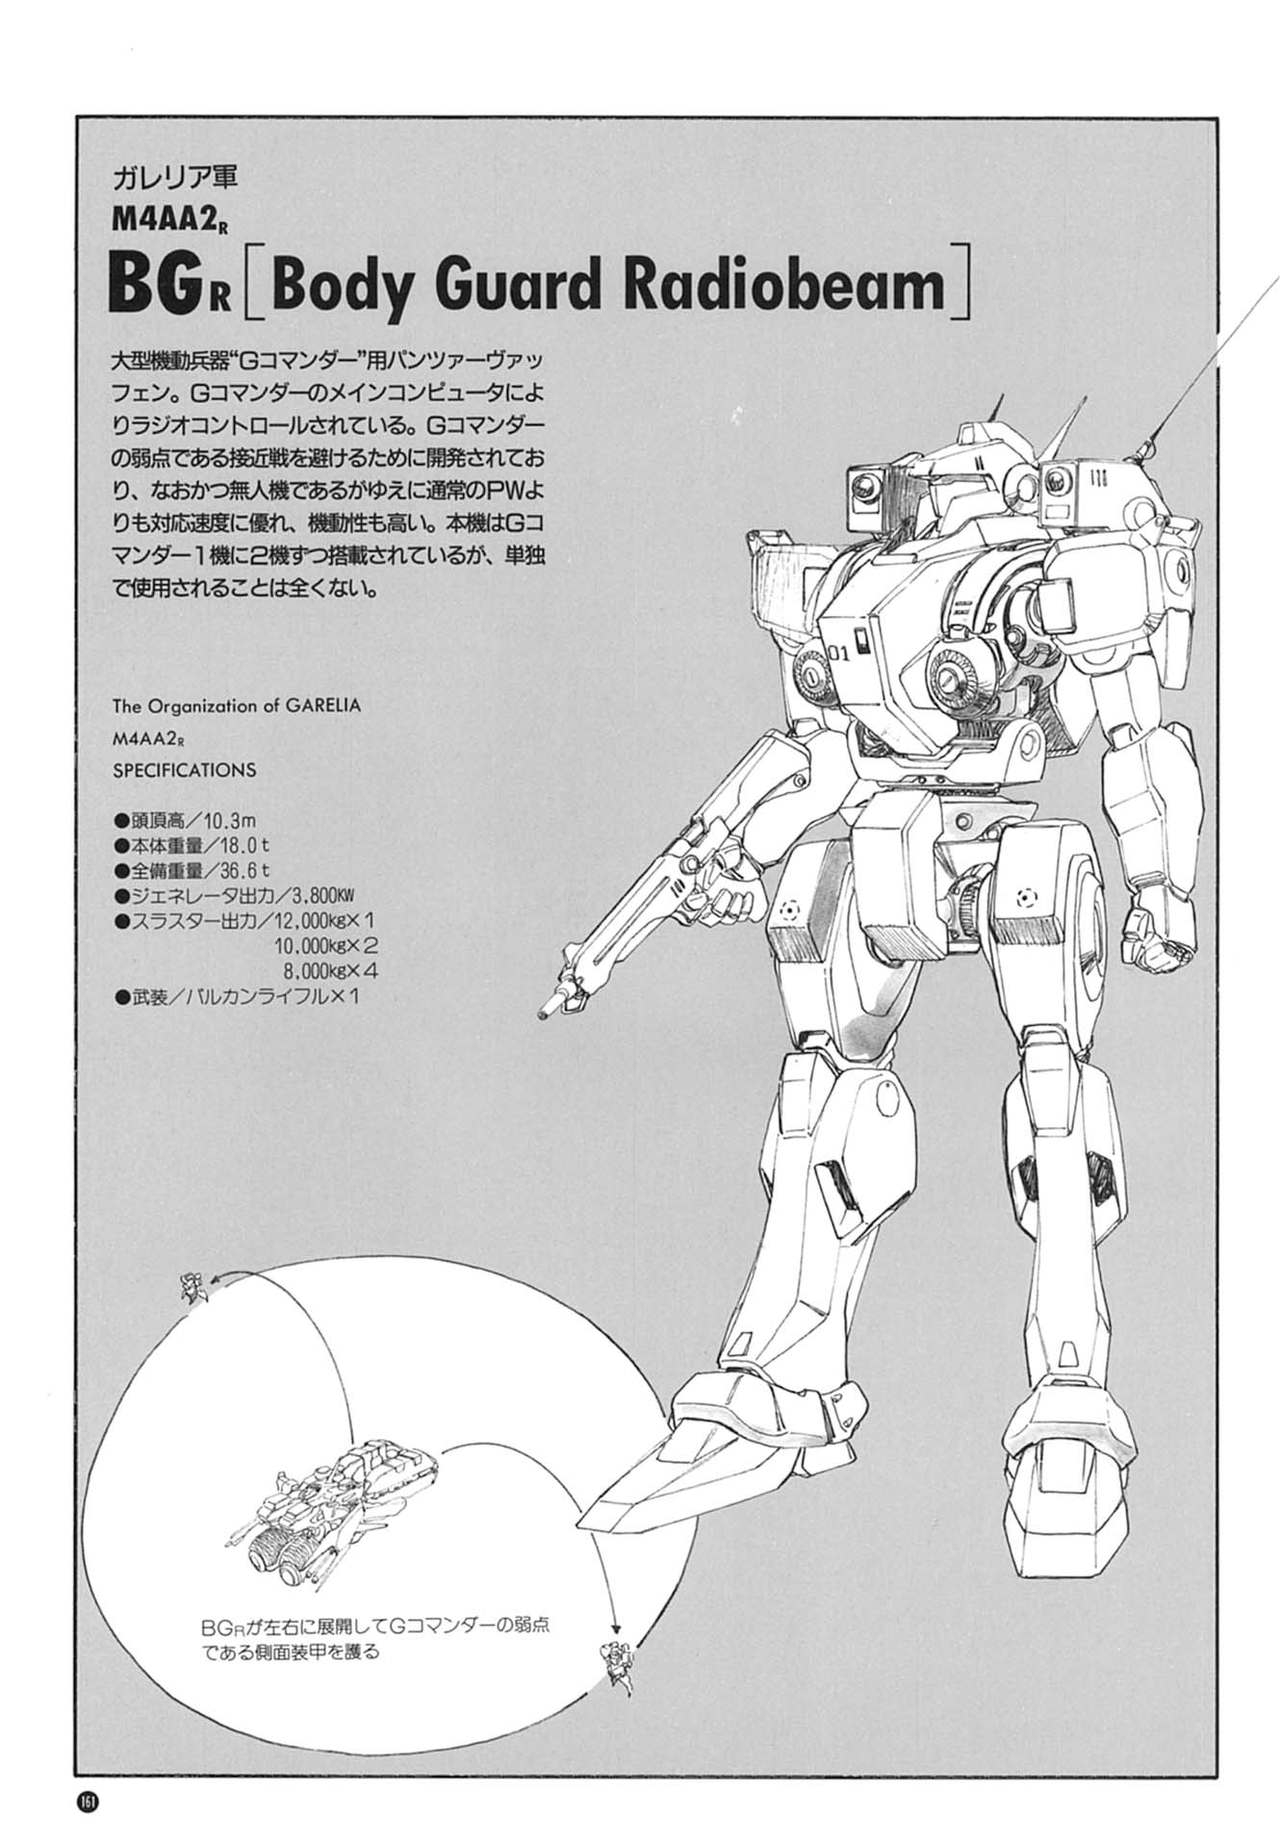 [Kazuhisa Kondo] Kazuhisa Kondo 2D & 3D Works - Go Ahead - From Mobile Suit Gundam to Original Mechanism 160